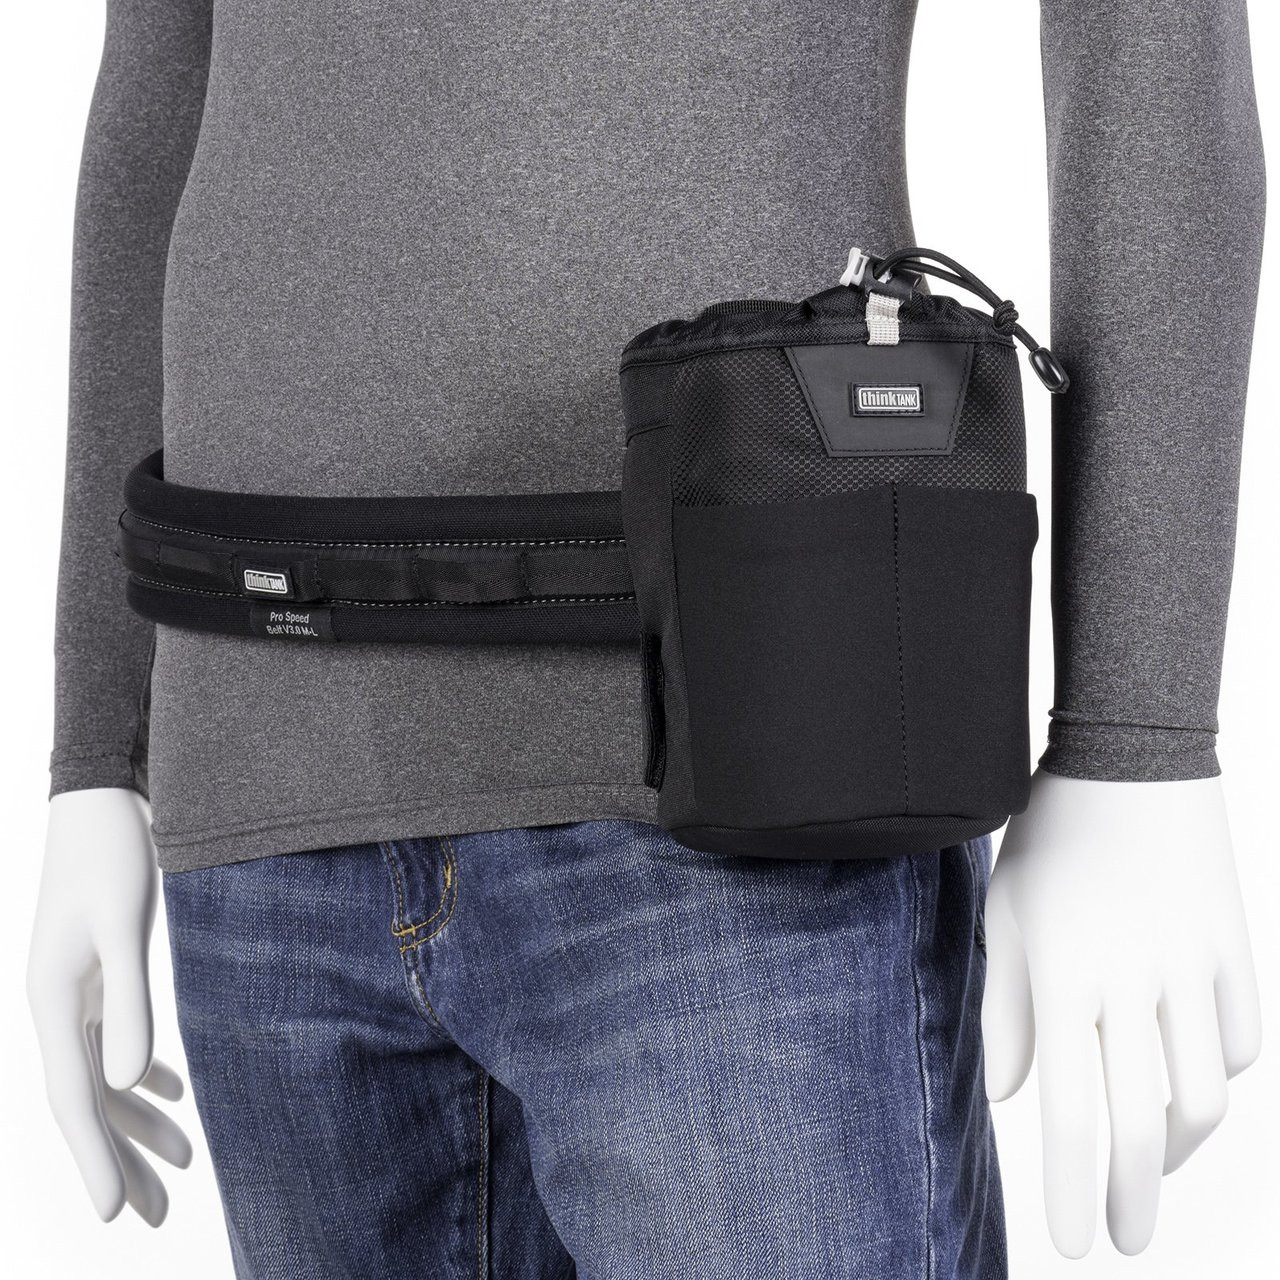 lens pouch belt